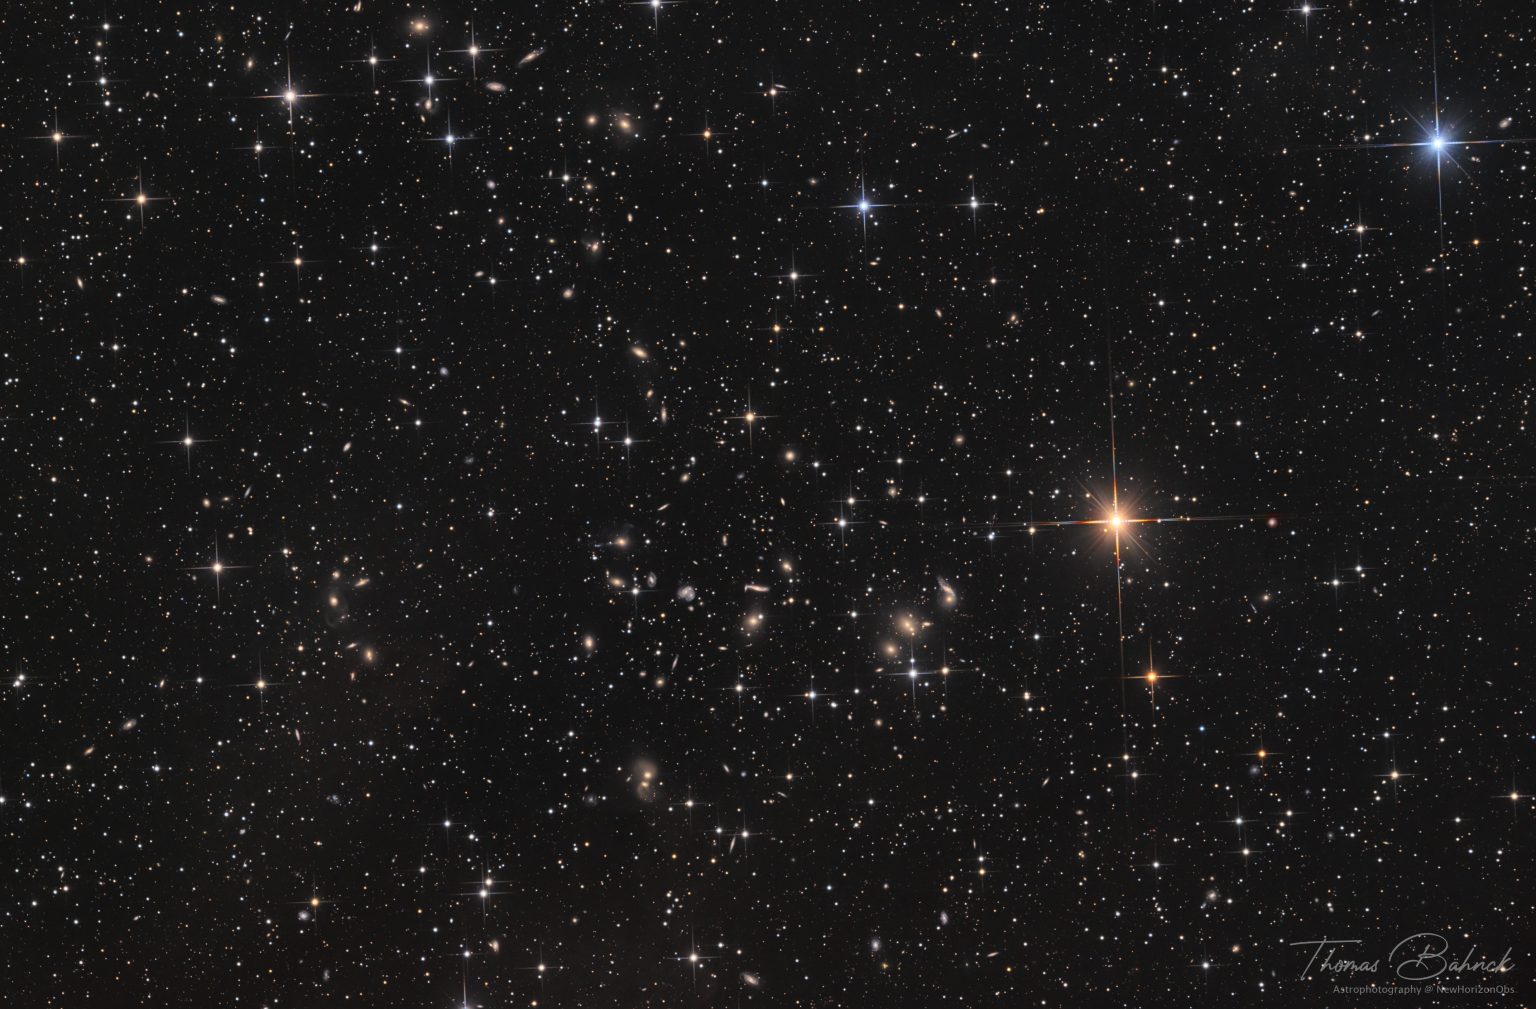 Abell 2151 - Hercules Cluster